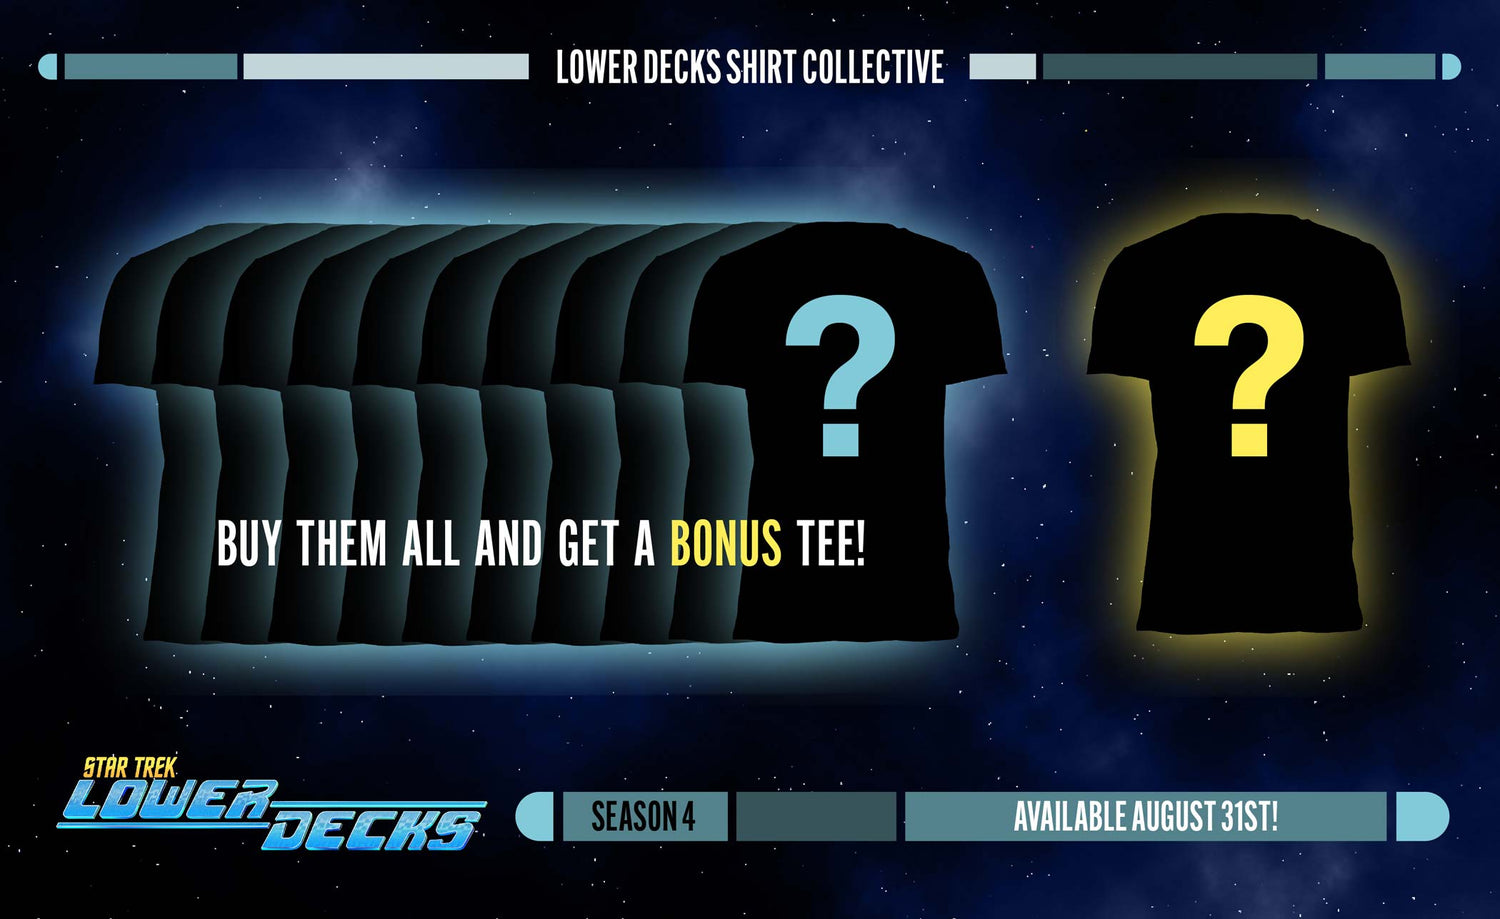 Star Trek Lower Decks Season 4 T-shirt Collective